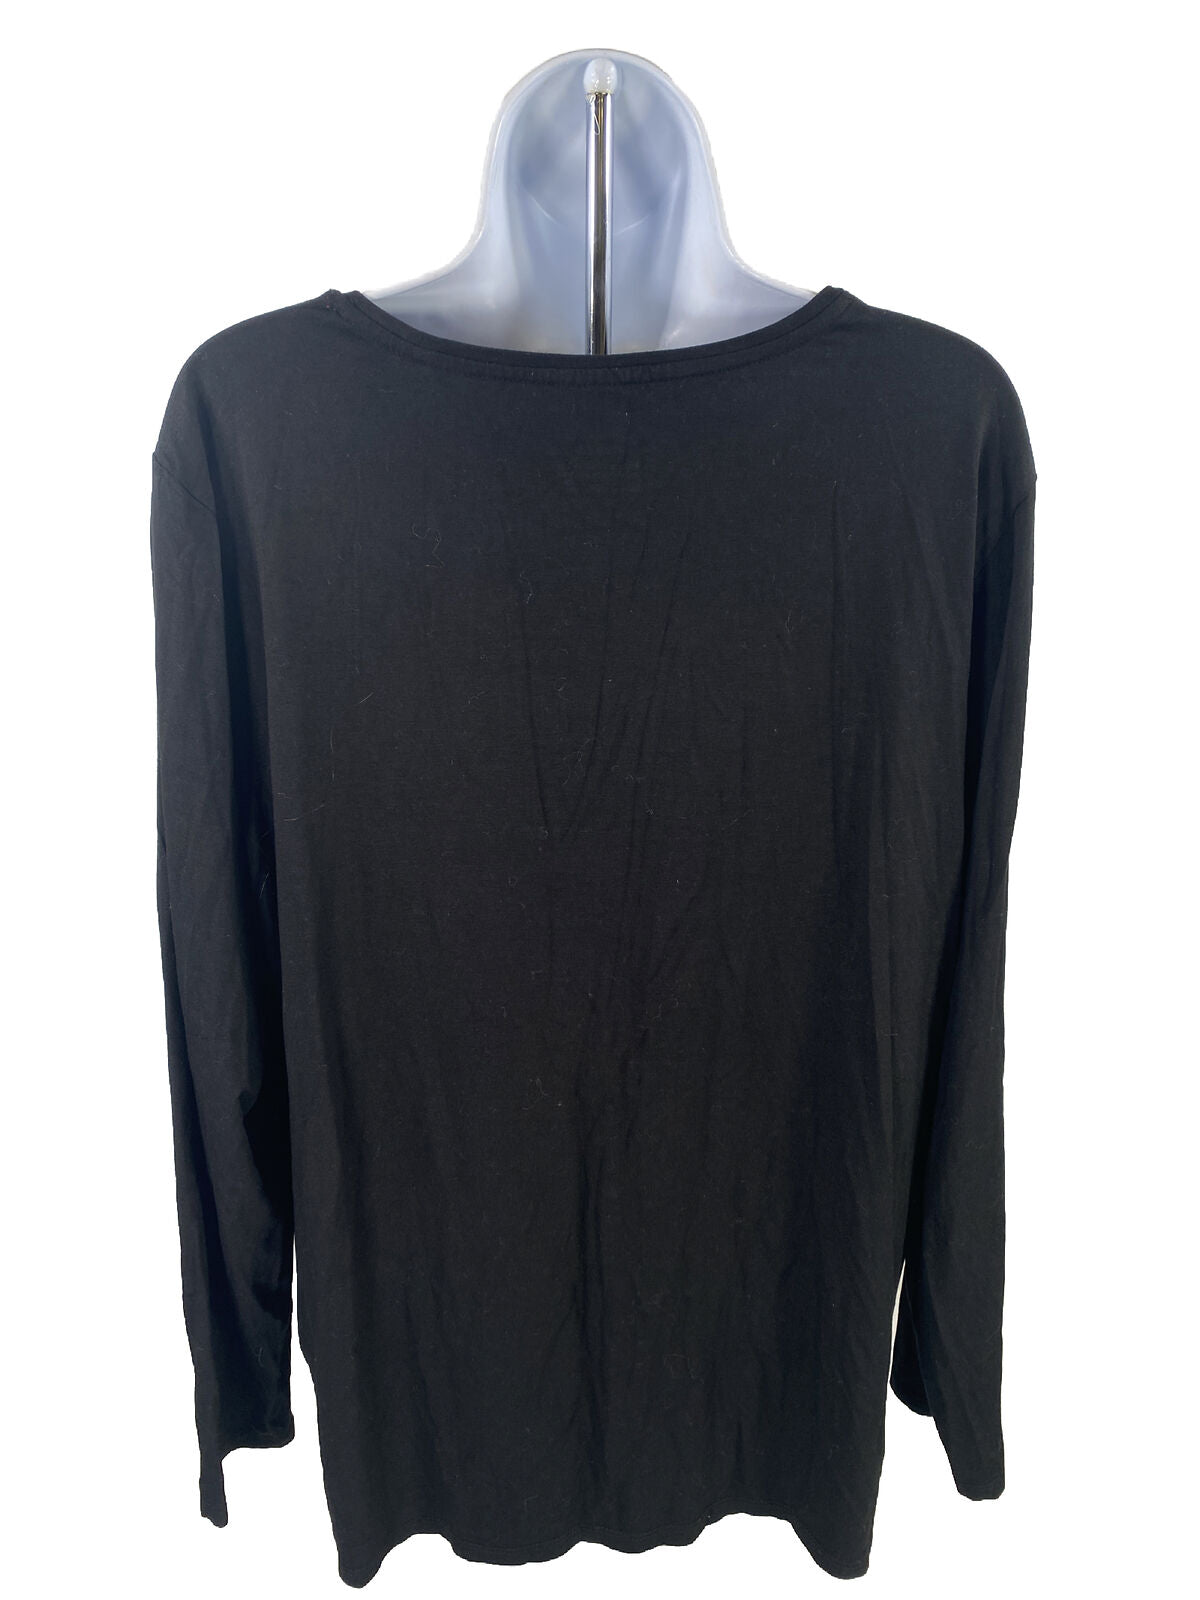 Chico's Women's Black Long Sleeve Ultimate Tee T-Shirt - 3/US XL